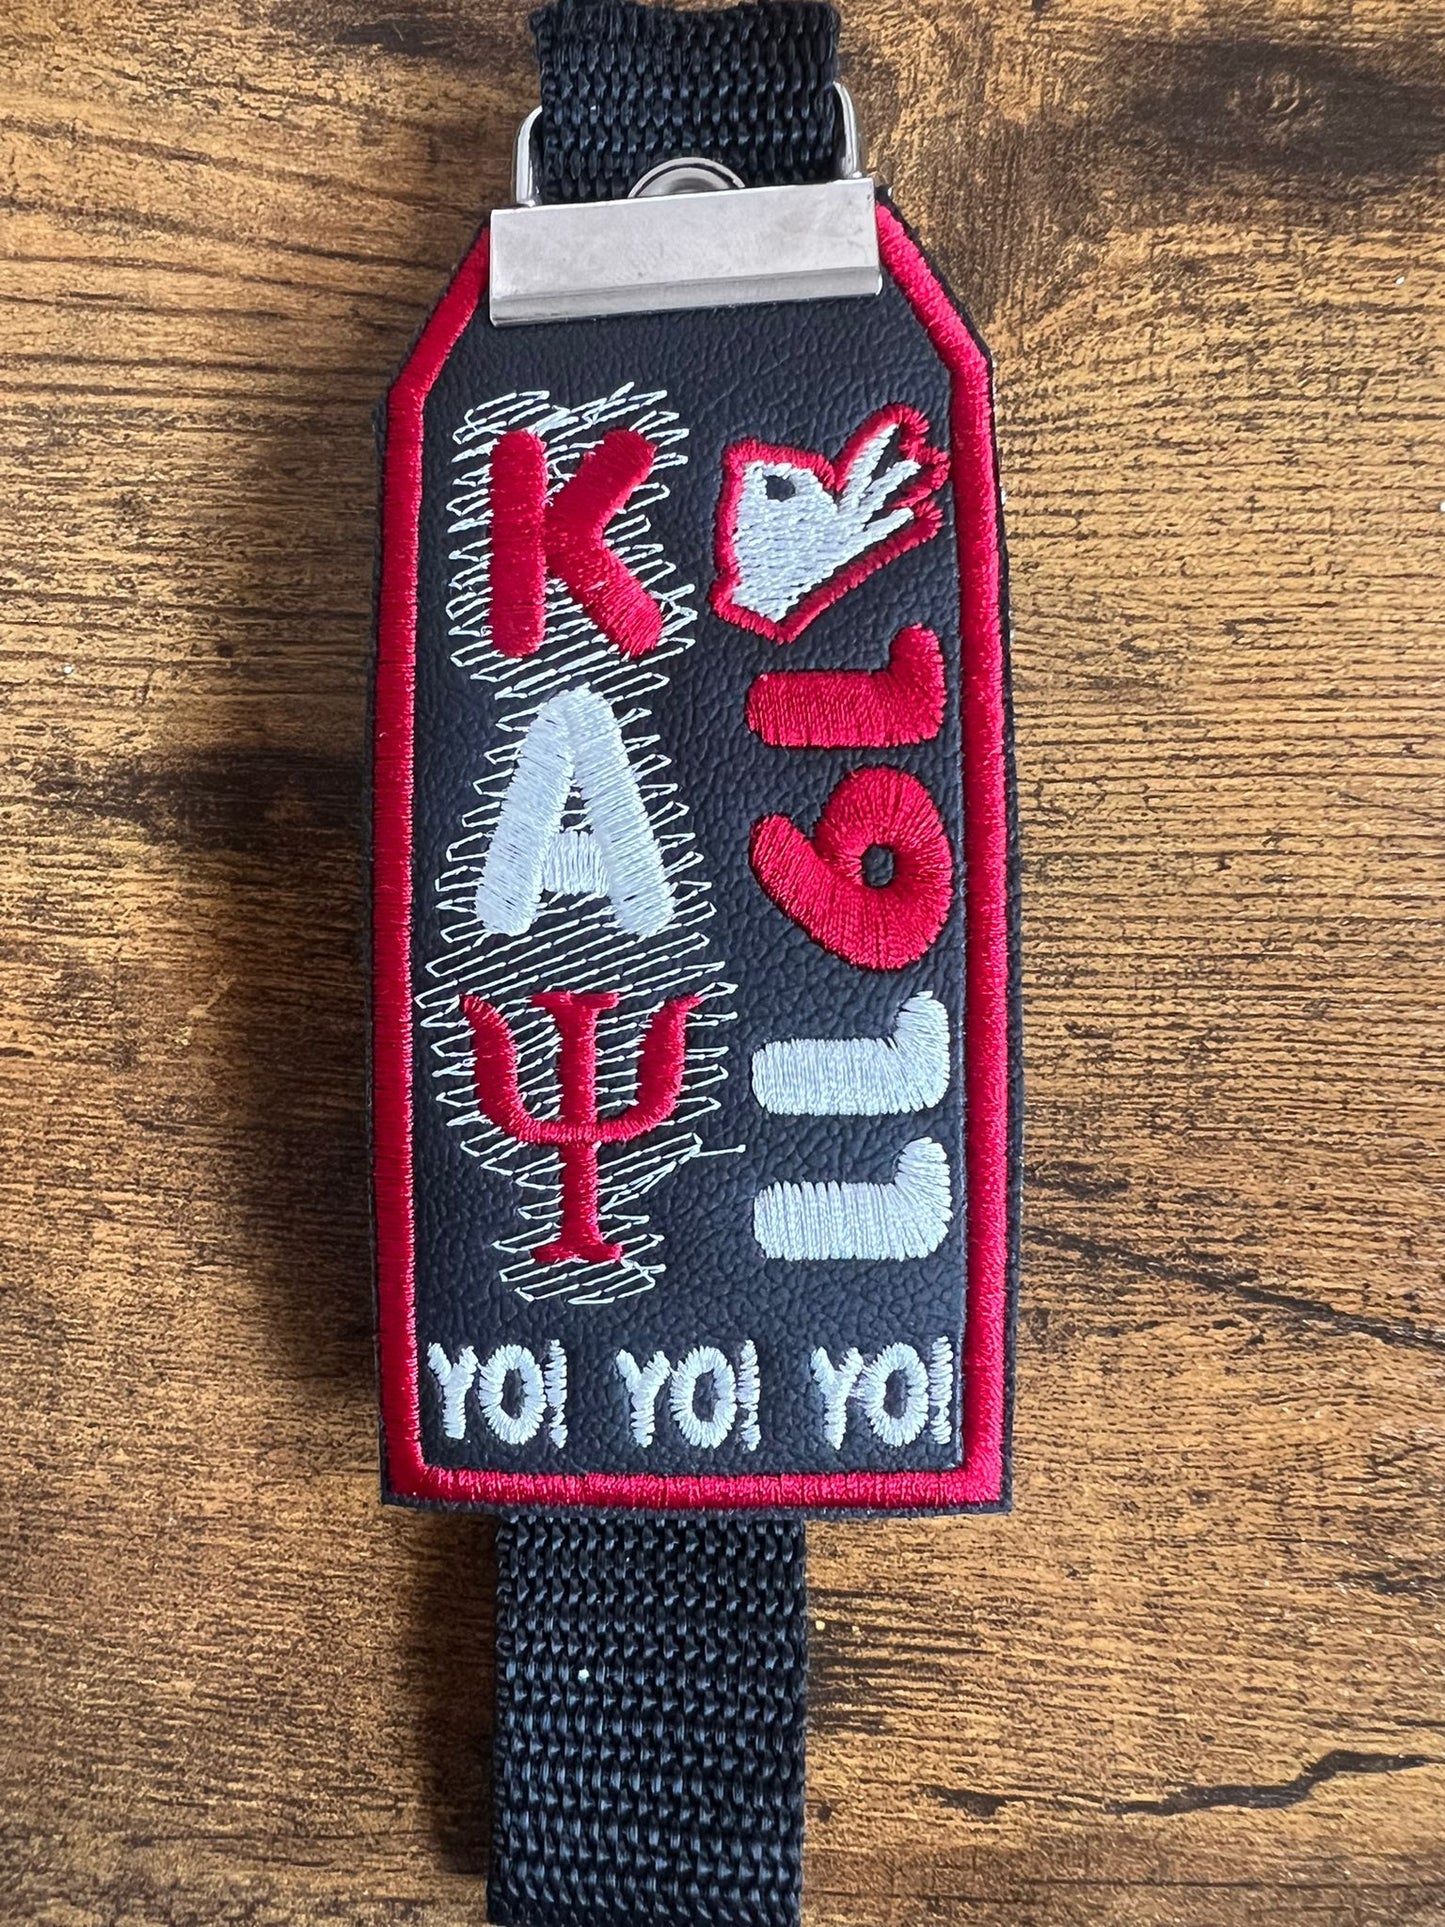 Kappa Alpha Psi Bag Tag (Red Border)/Strap